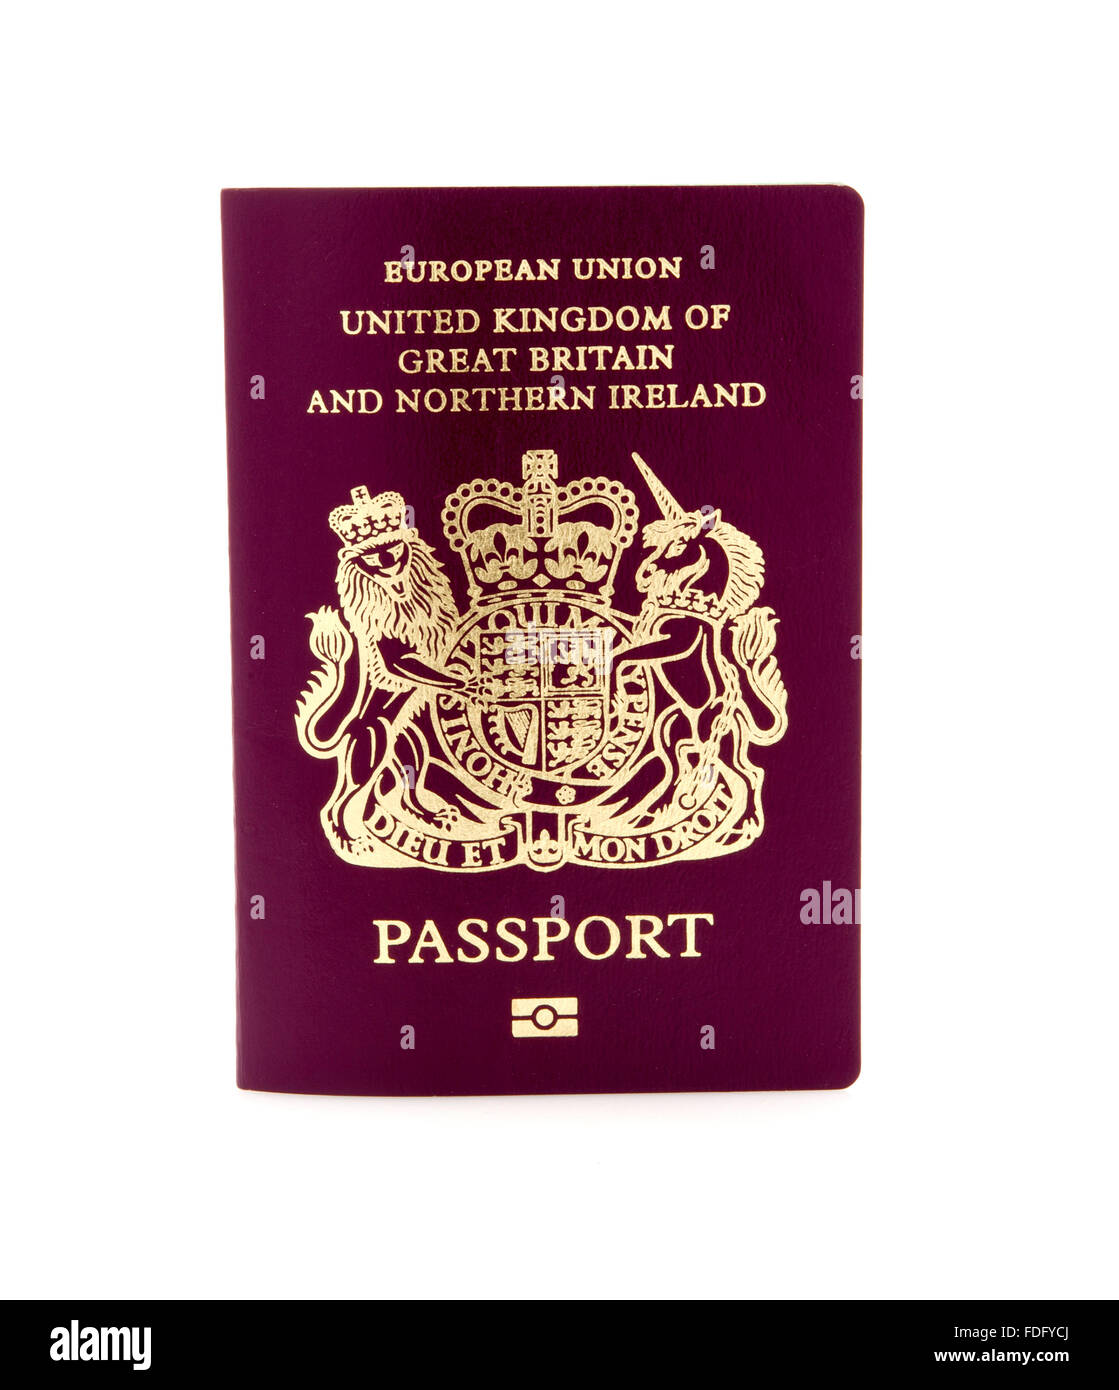 Create perfect UK passport photo white background For passport application